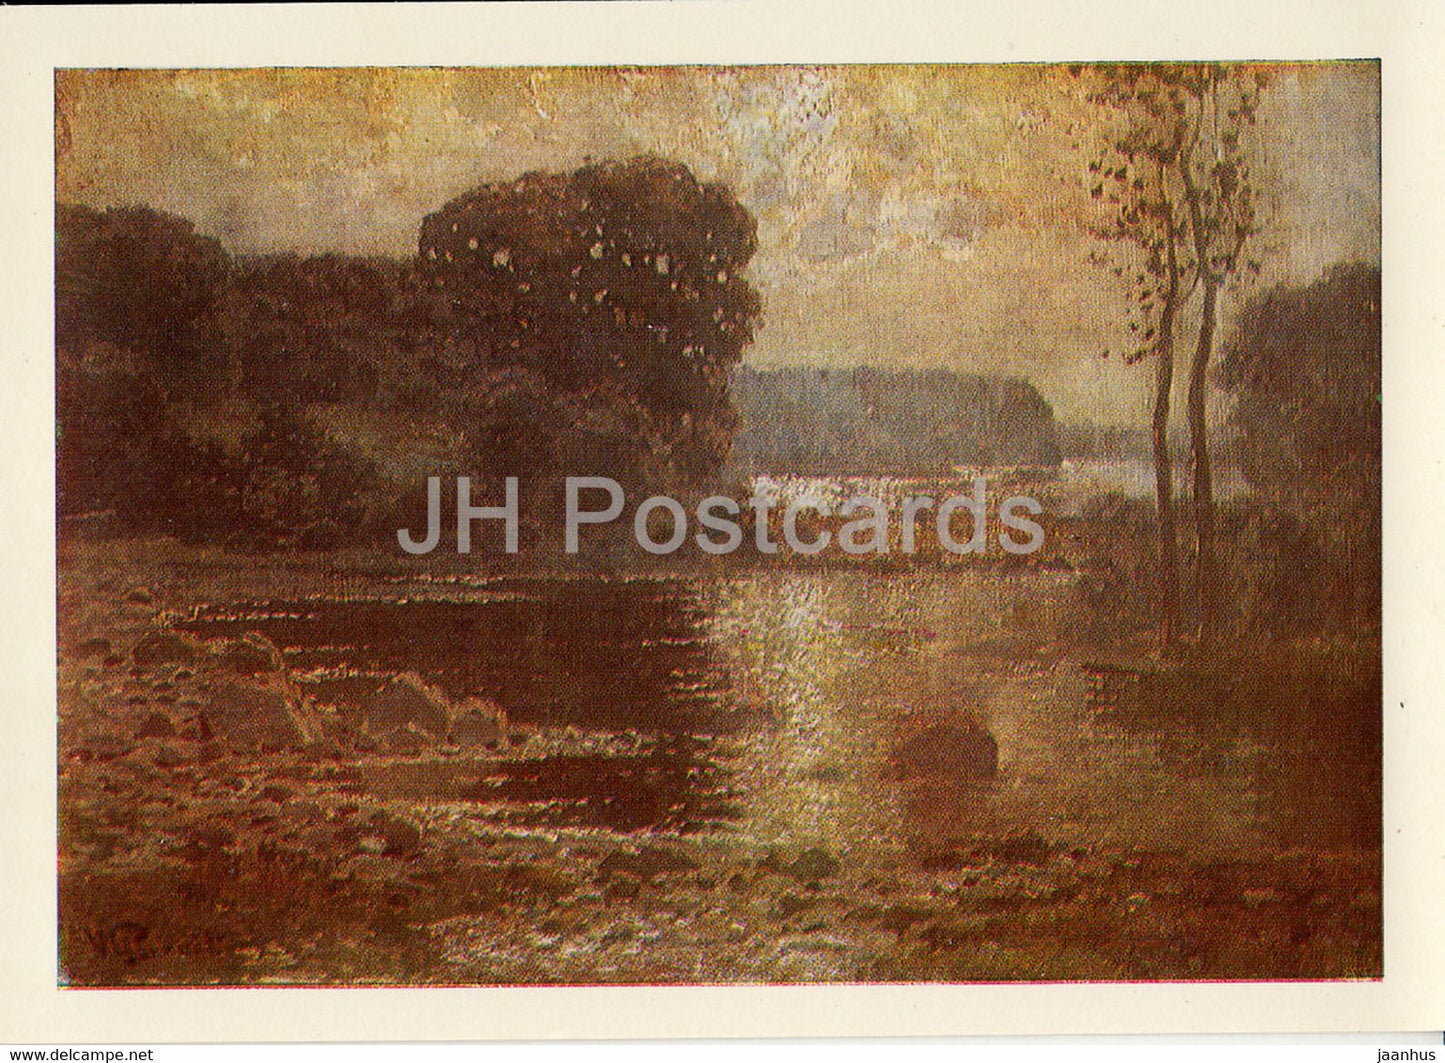 painting by Vilhelms Purvitis - Inlet of the river of Gauja - Latvian art - Latvia USSR - unused - JH Postcards